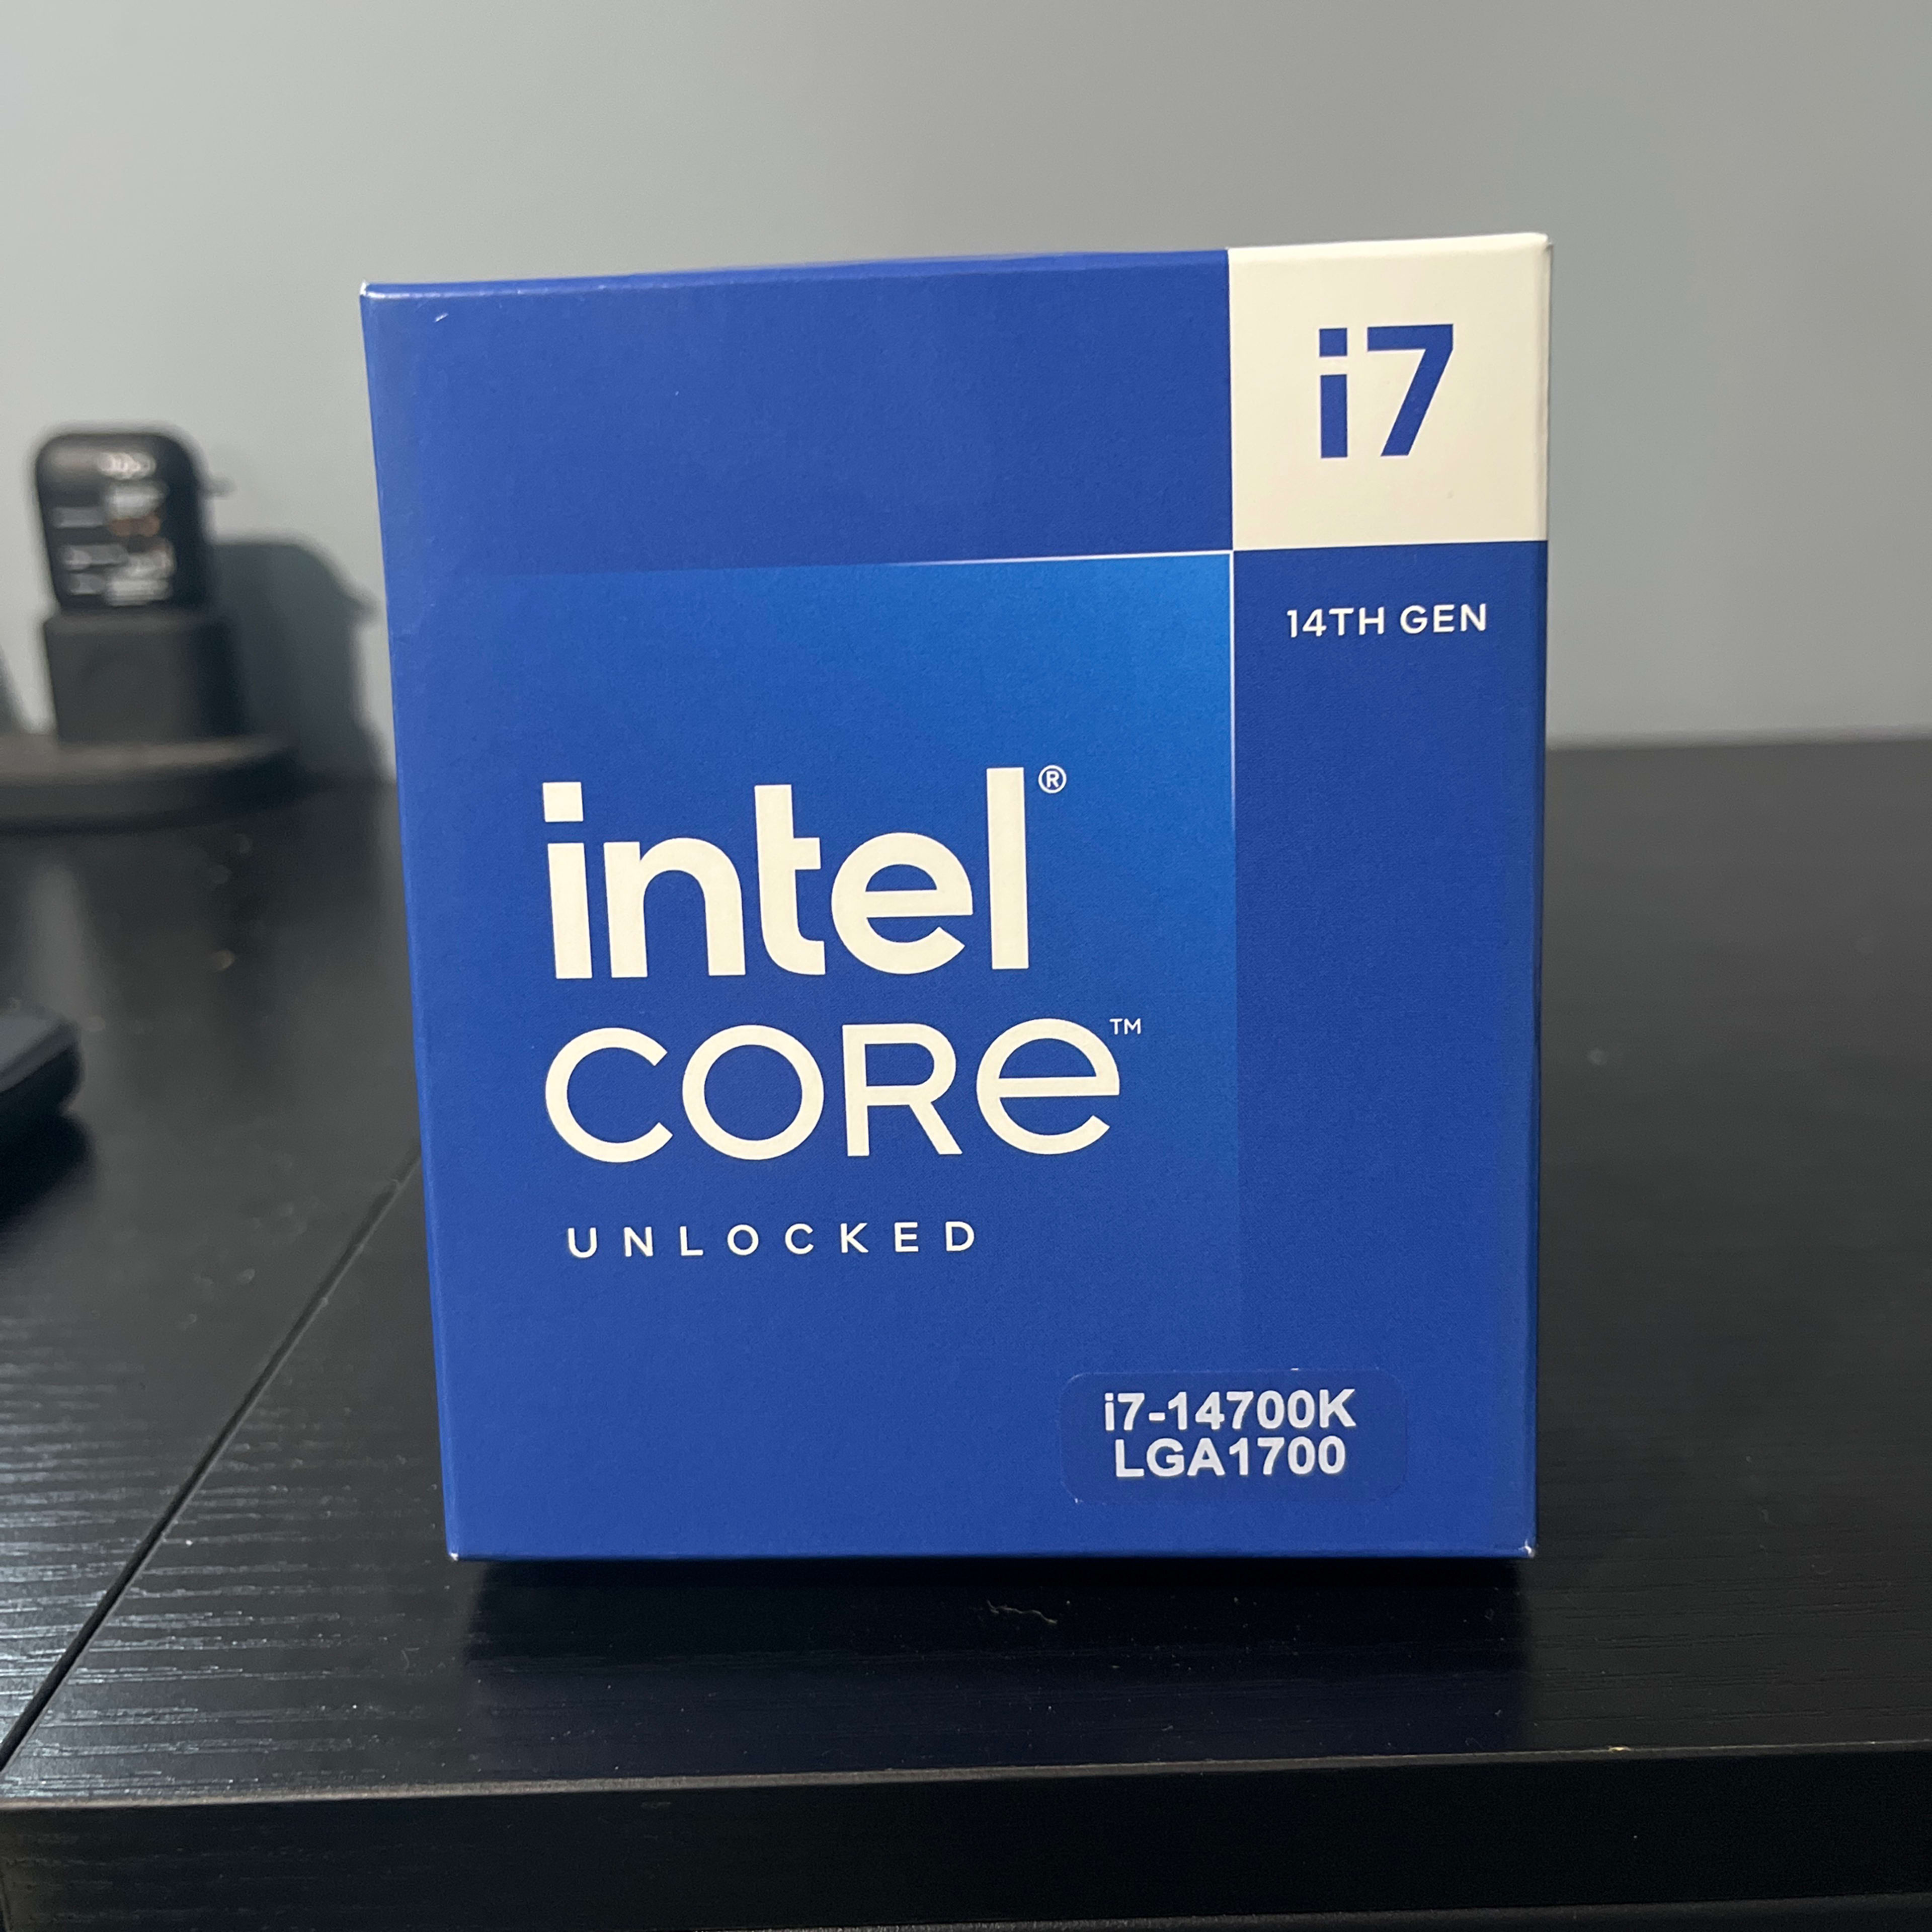 Brand new intel core 17 14700k